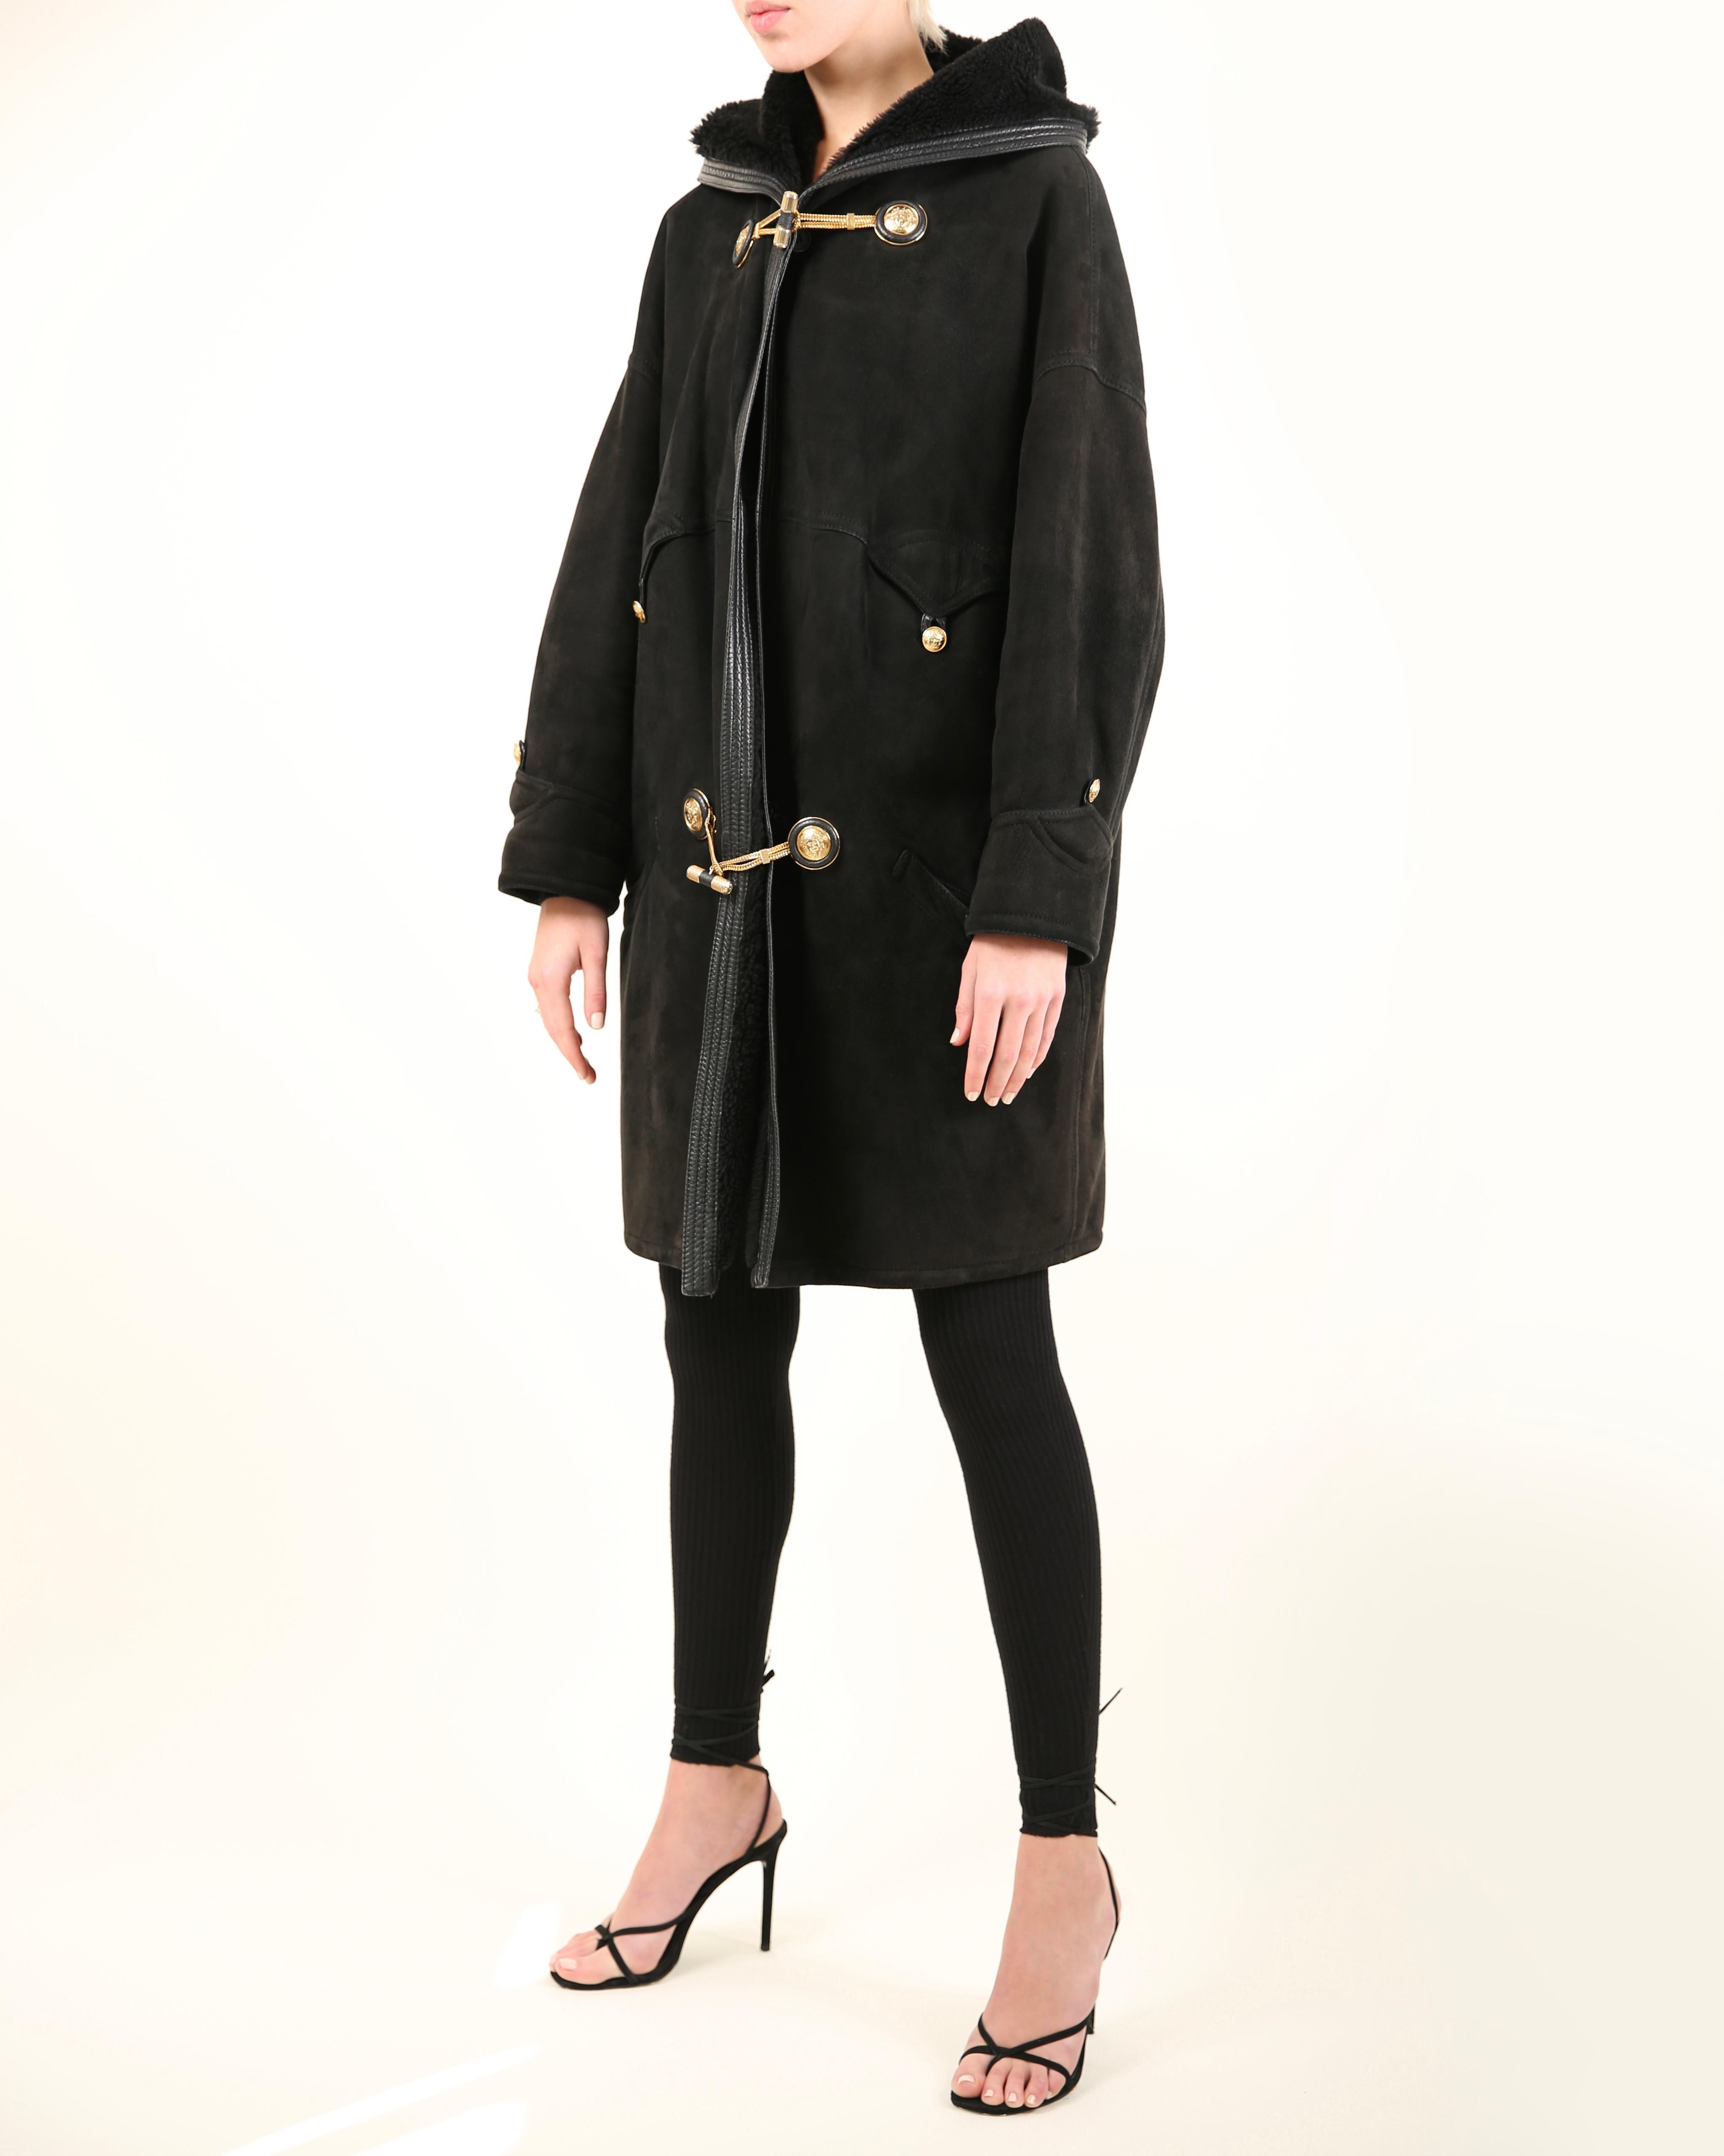 Gianni Versace 90's XS - L black leather suede shearling bondage coat jacket For Sale 3